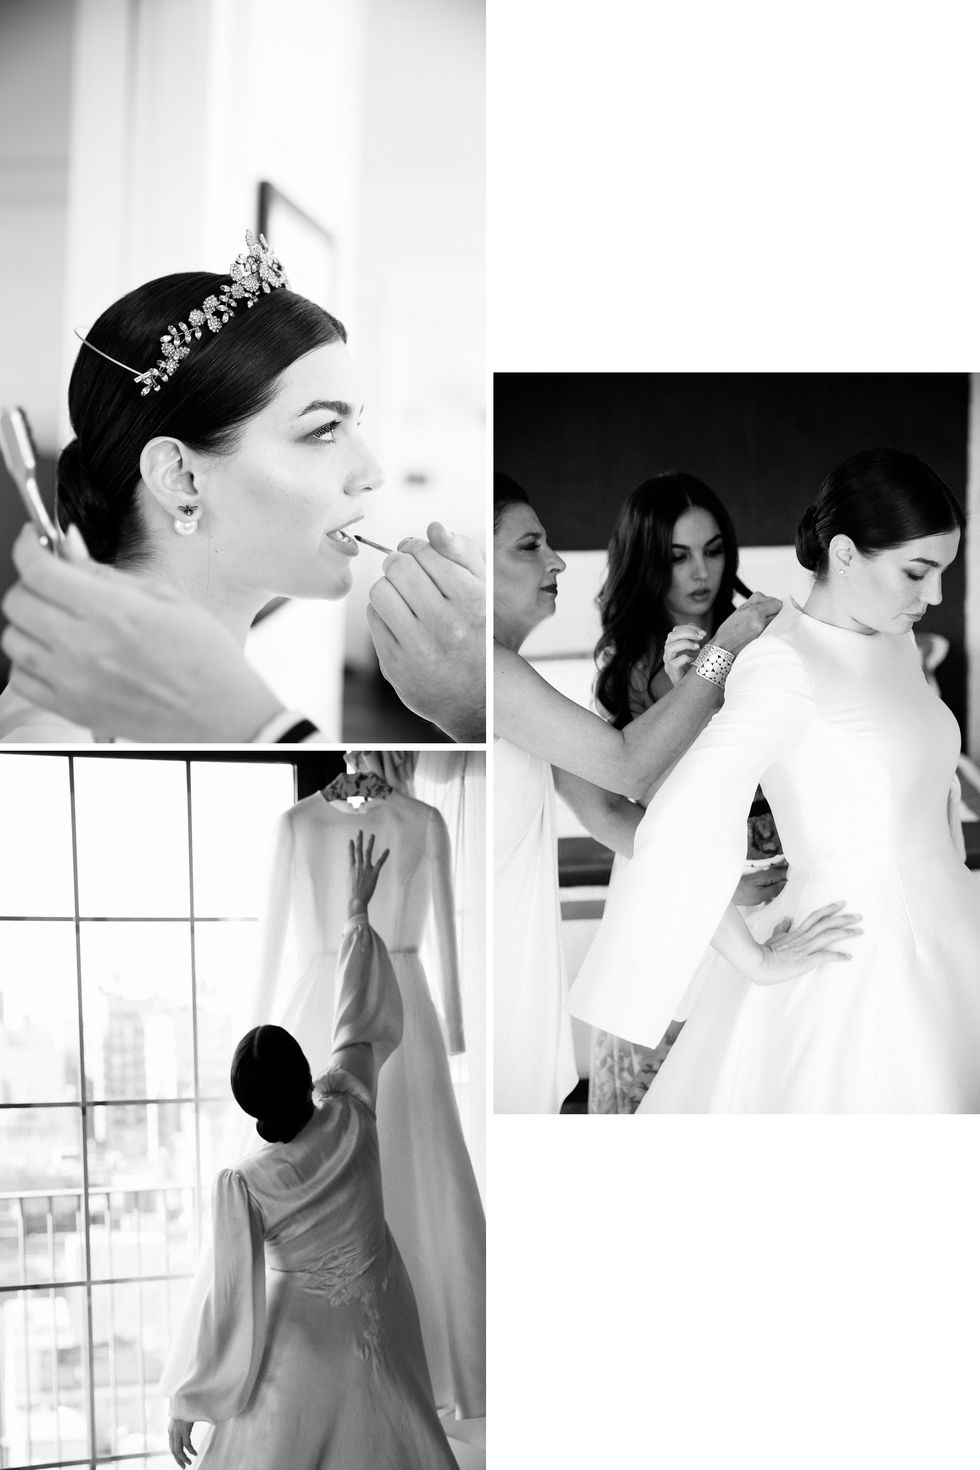 Photograph, White, Headpiece, Veil, Bride, Wedding dress, Black-and-white, Bridal accessory, Hair accessory, Bridal veil, 